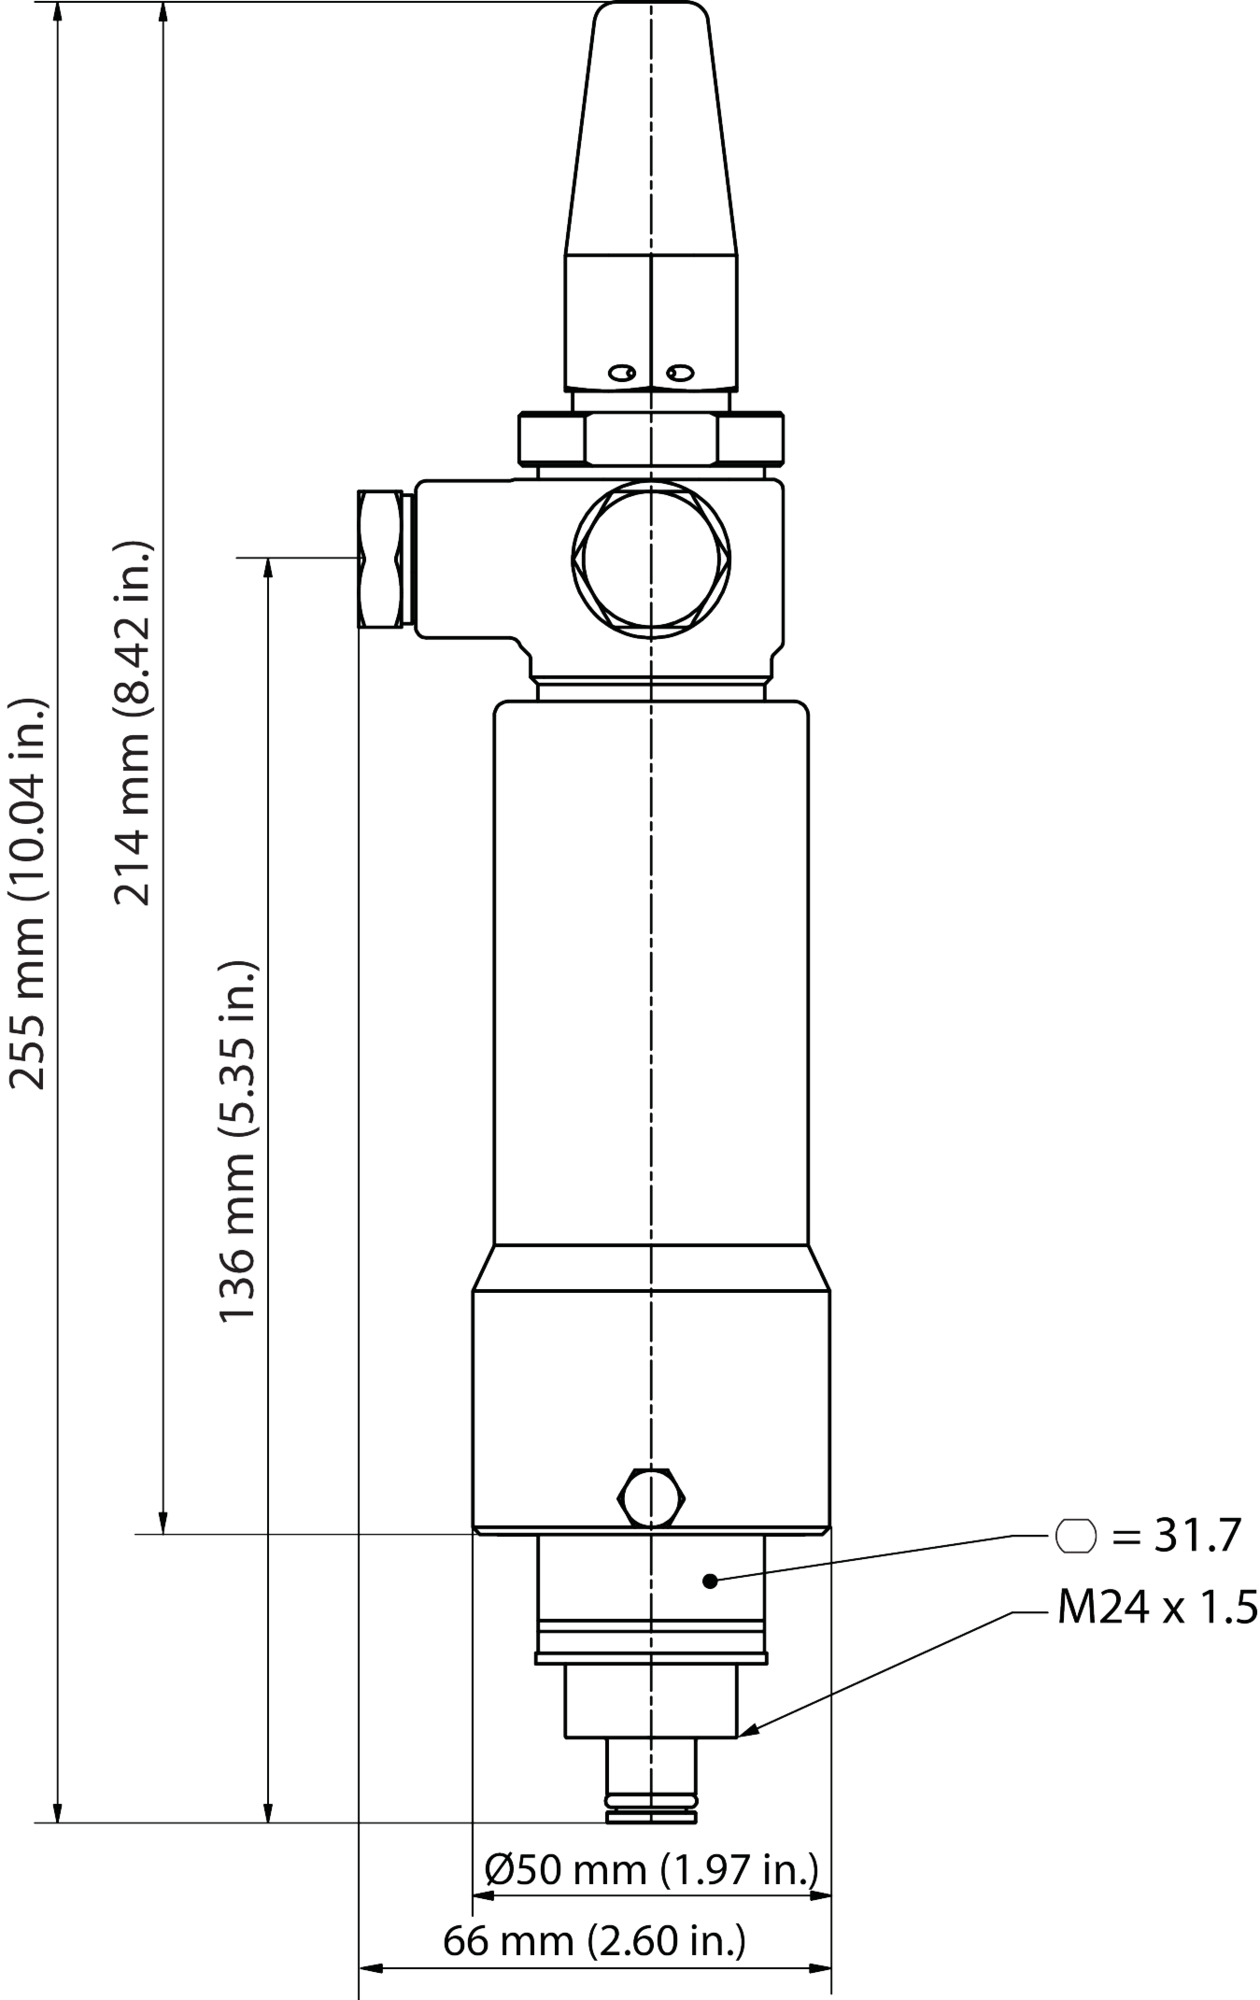 Pilot valve, CVPP-M, Diff.-pressure pilot valve